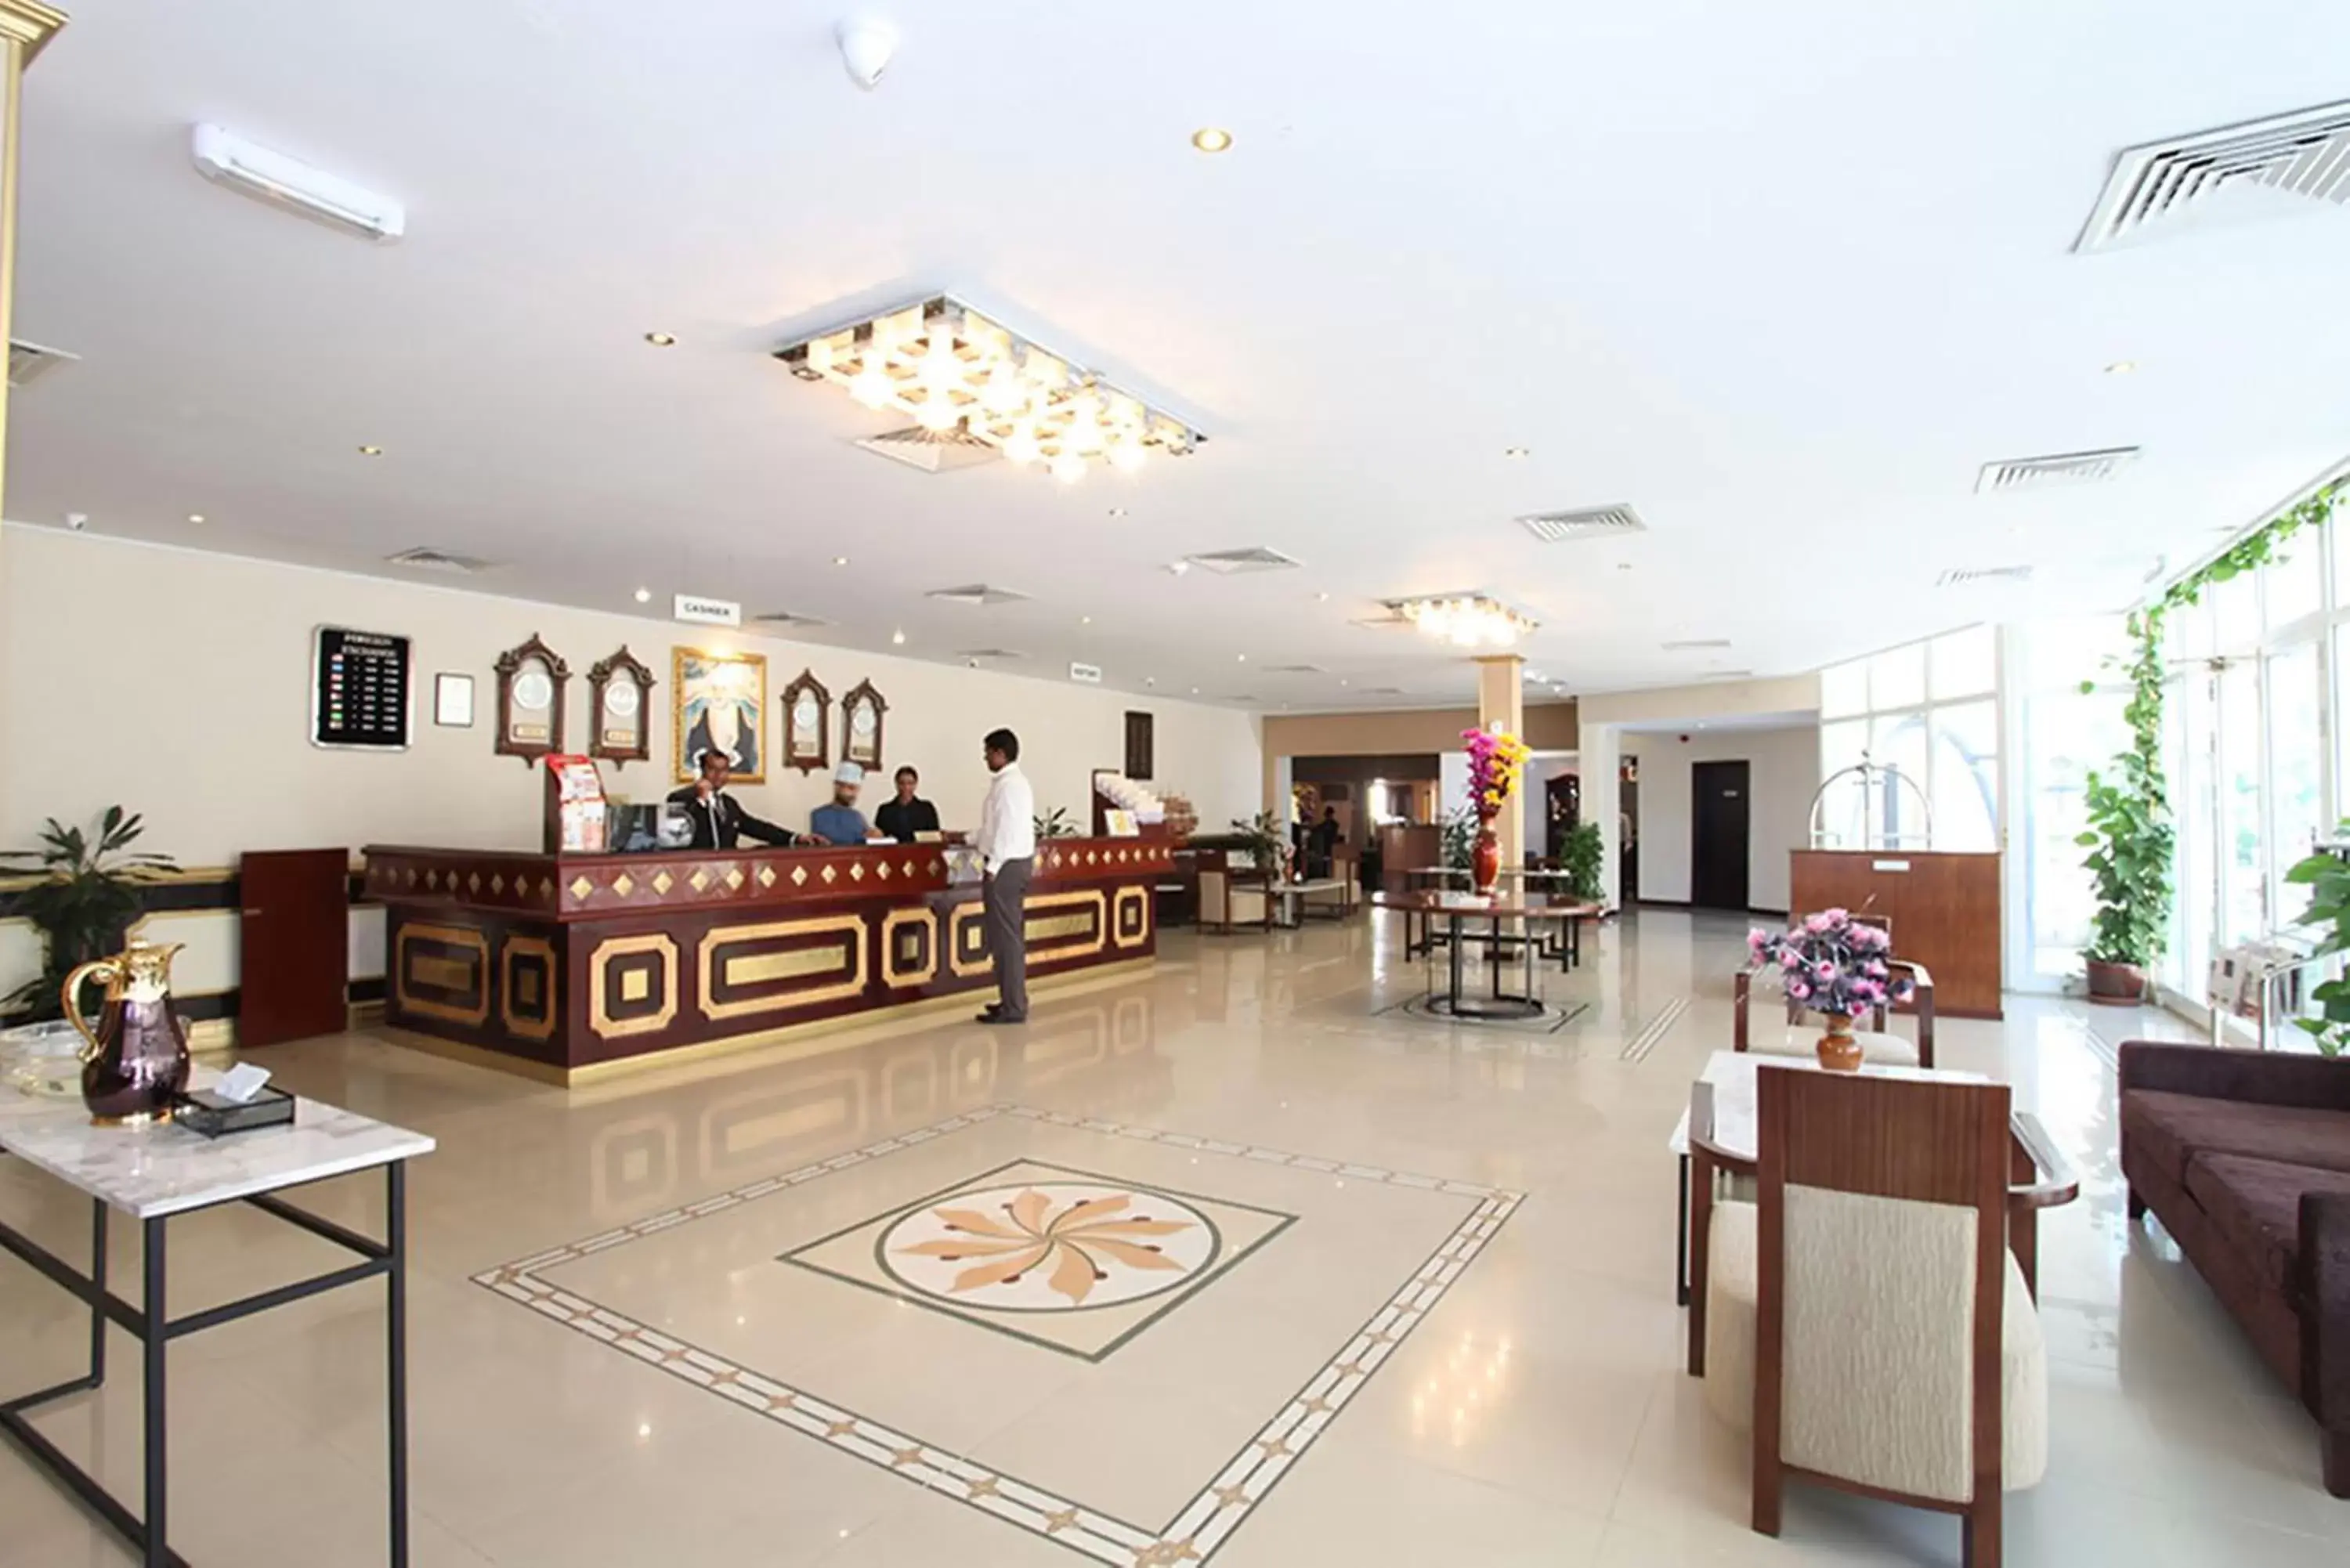 Lobby or reception in Ramee Dream Resort